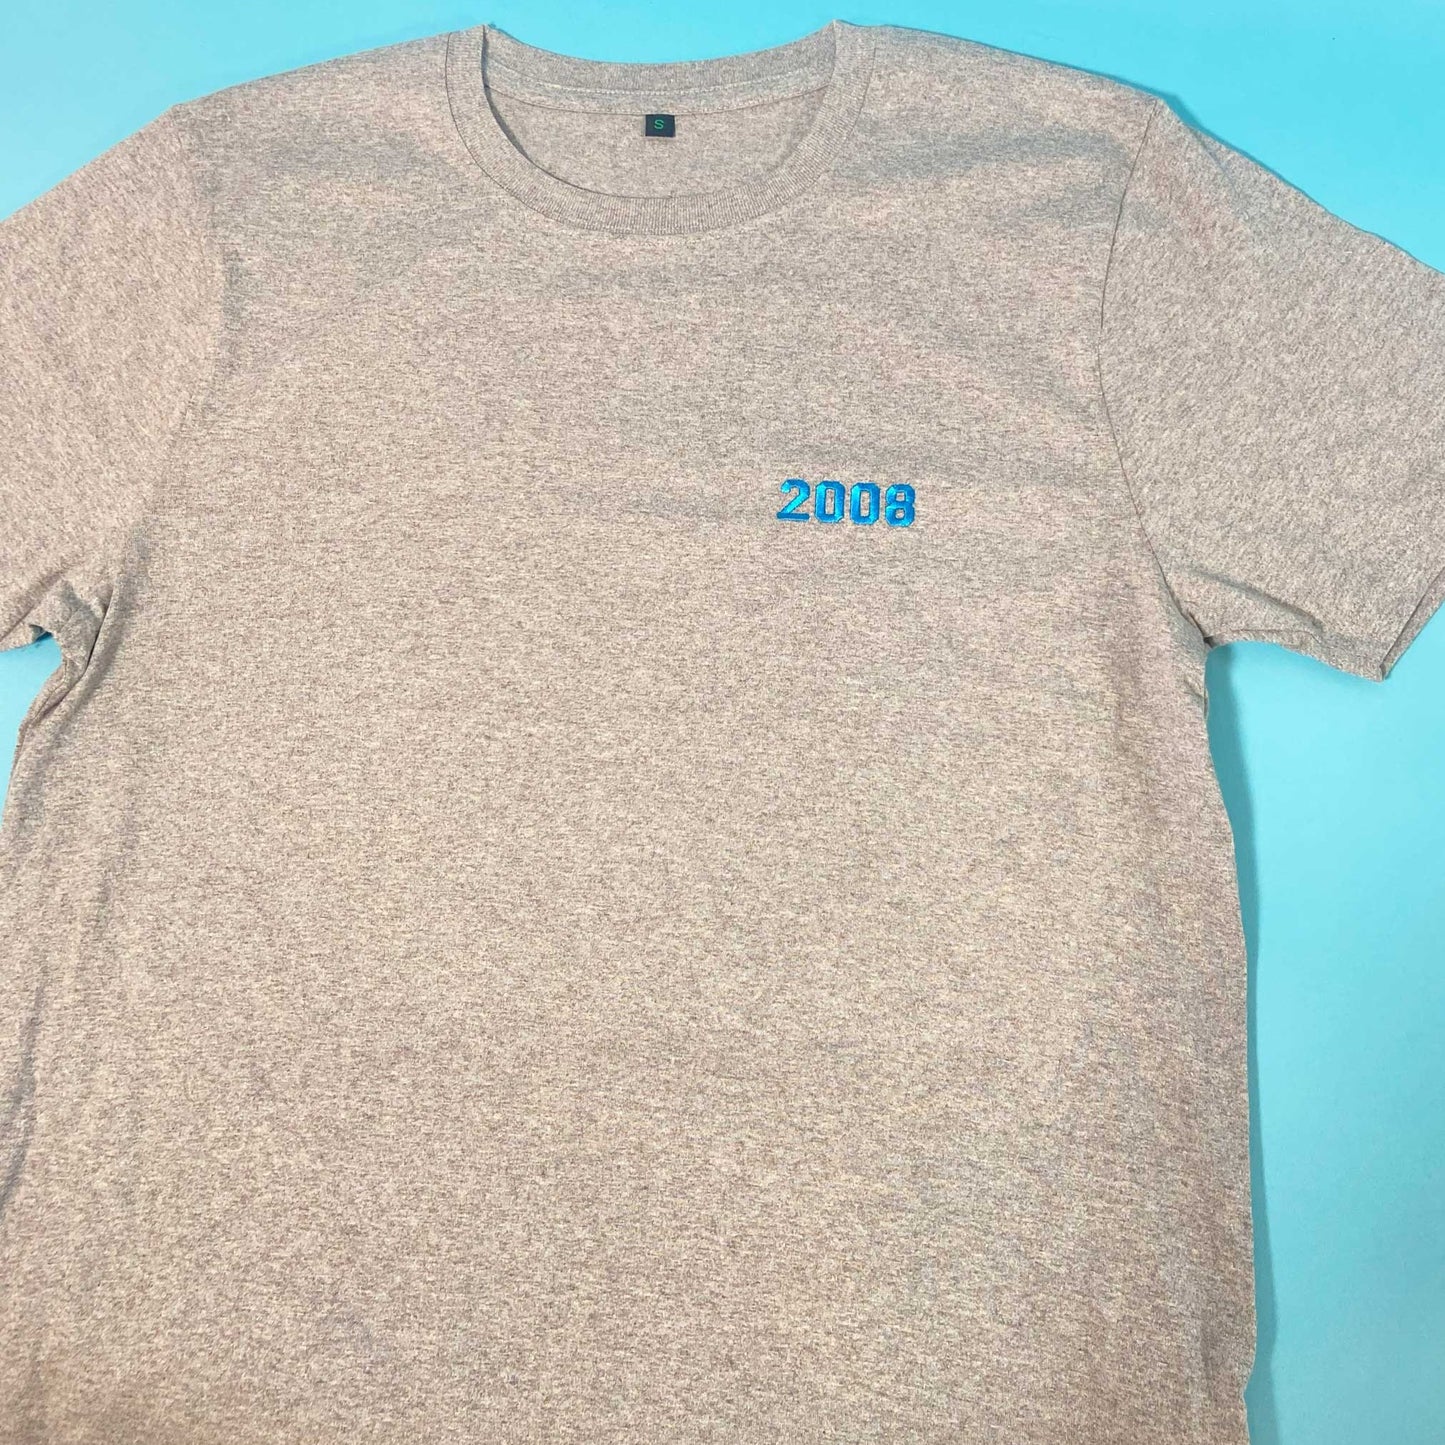 S Grey & Blue 2008 Year T-Shirt SALE